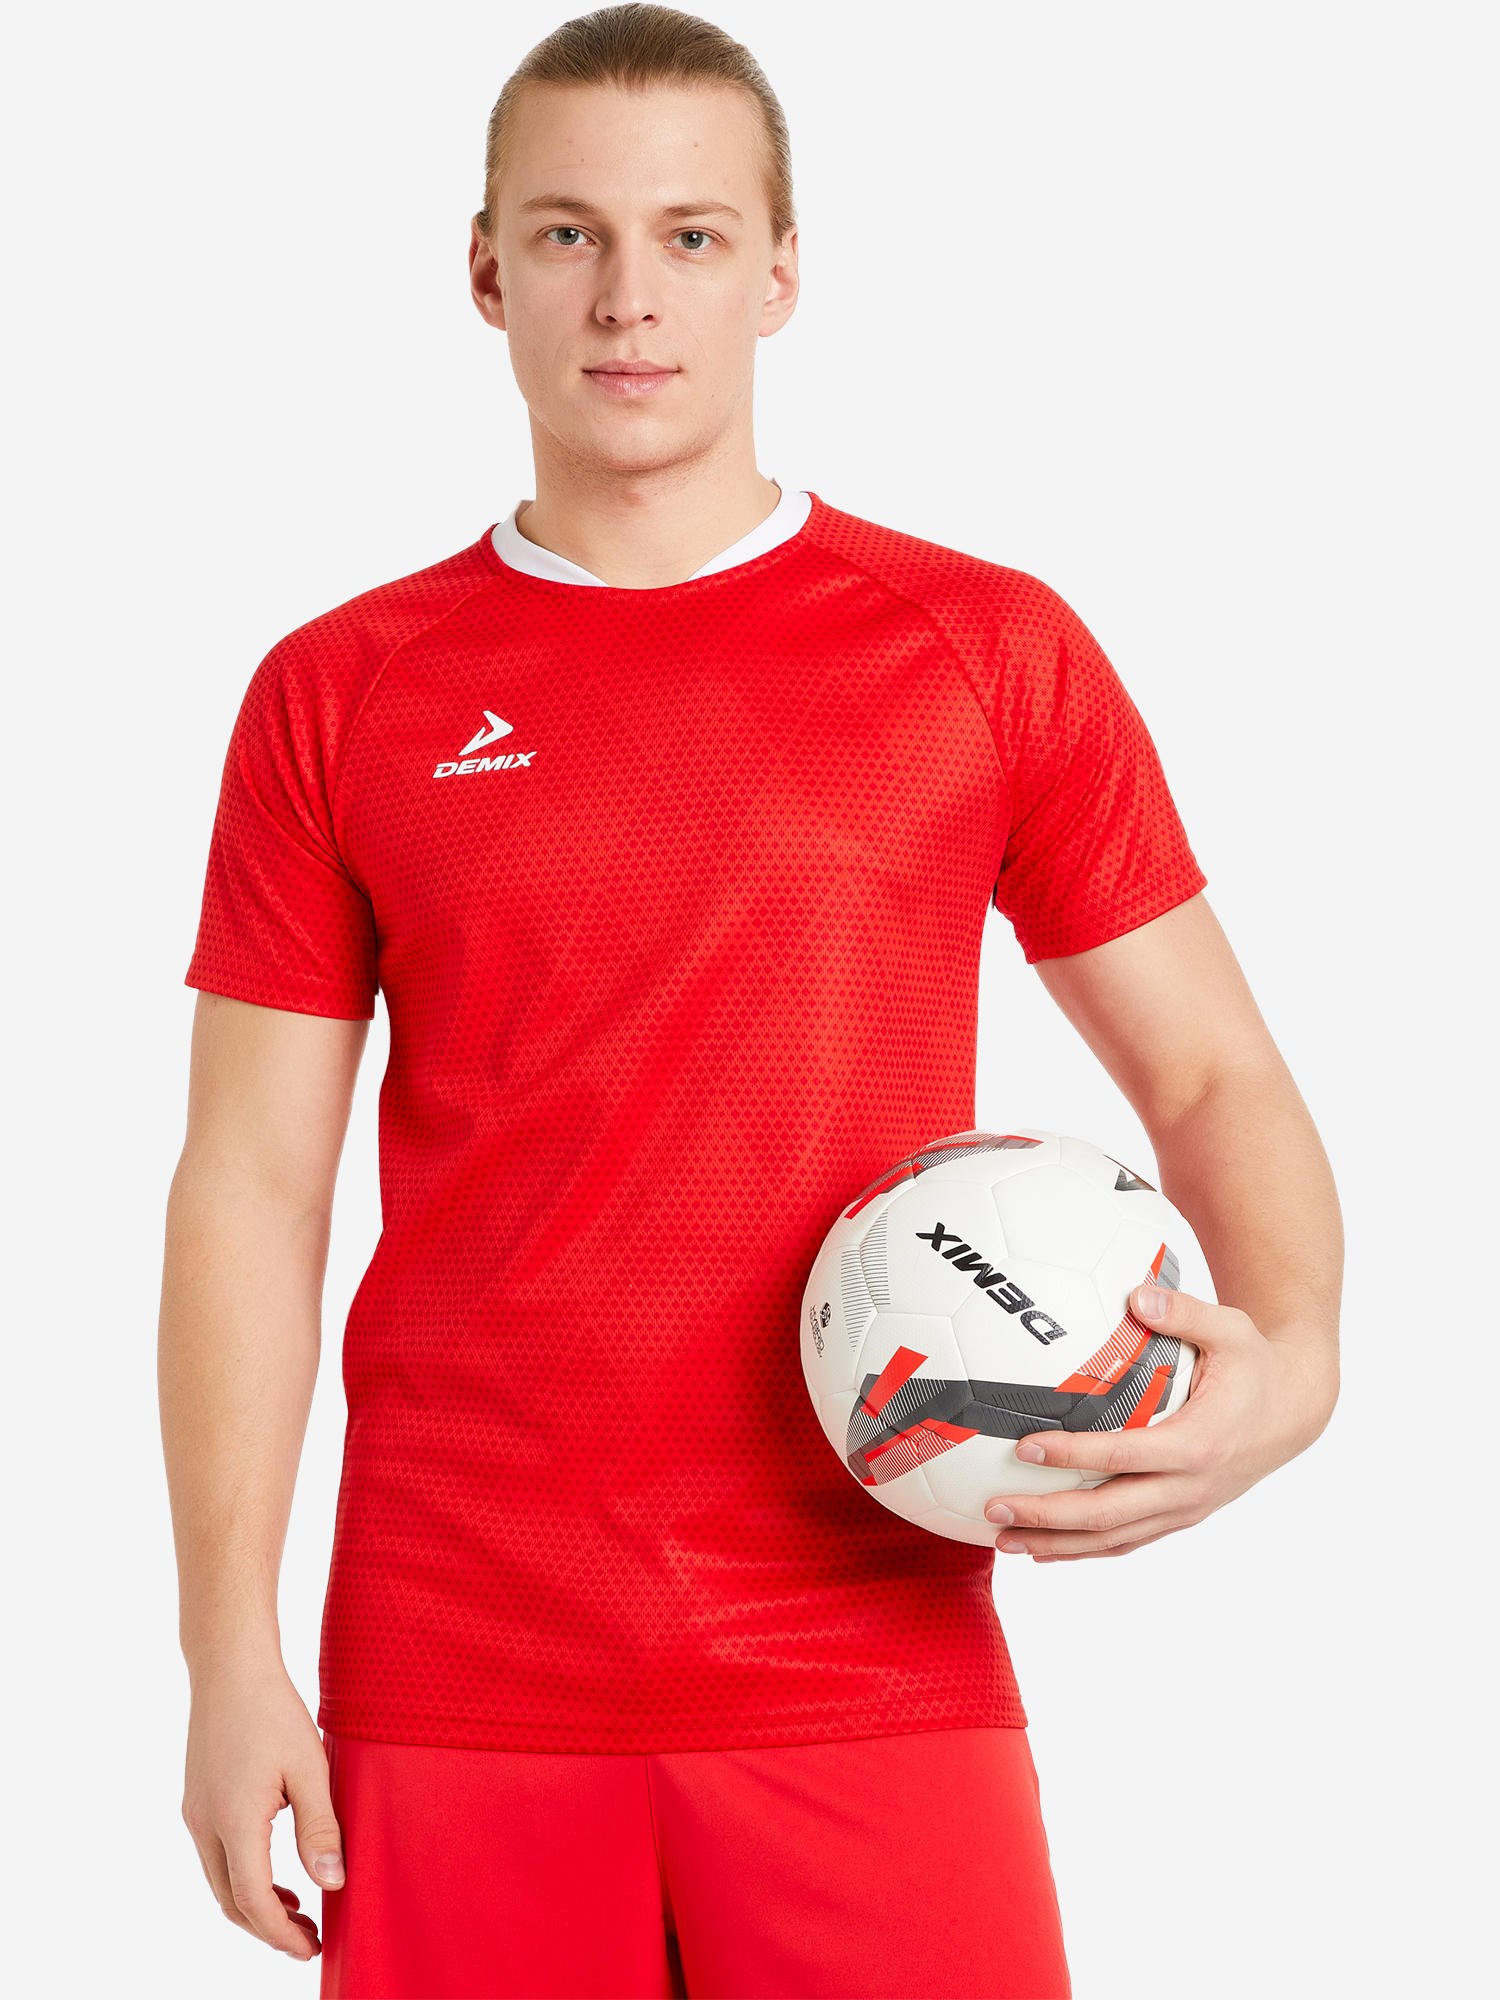 Футболка мужская Demix Strike, Красный футболка мужская demix pace красный